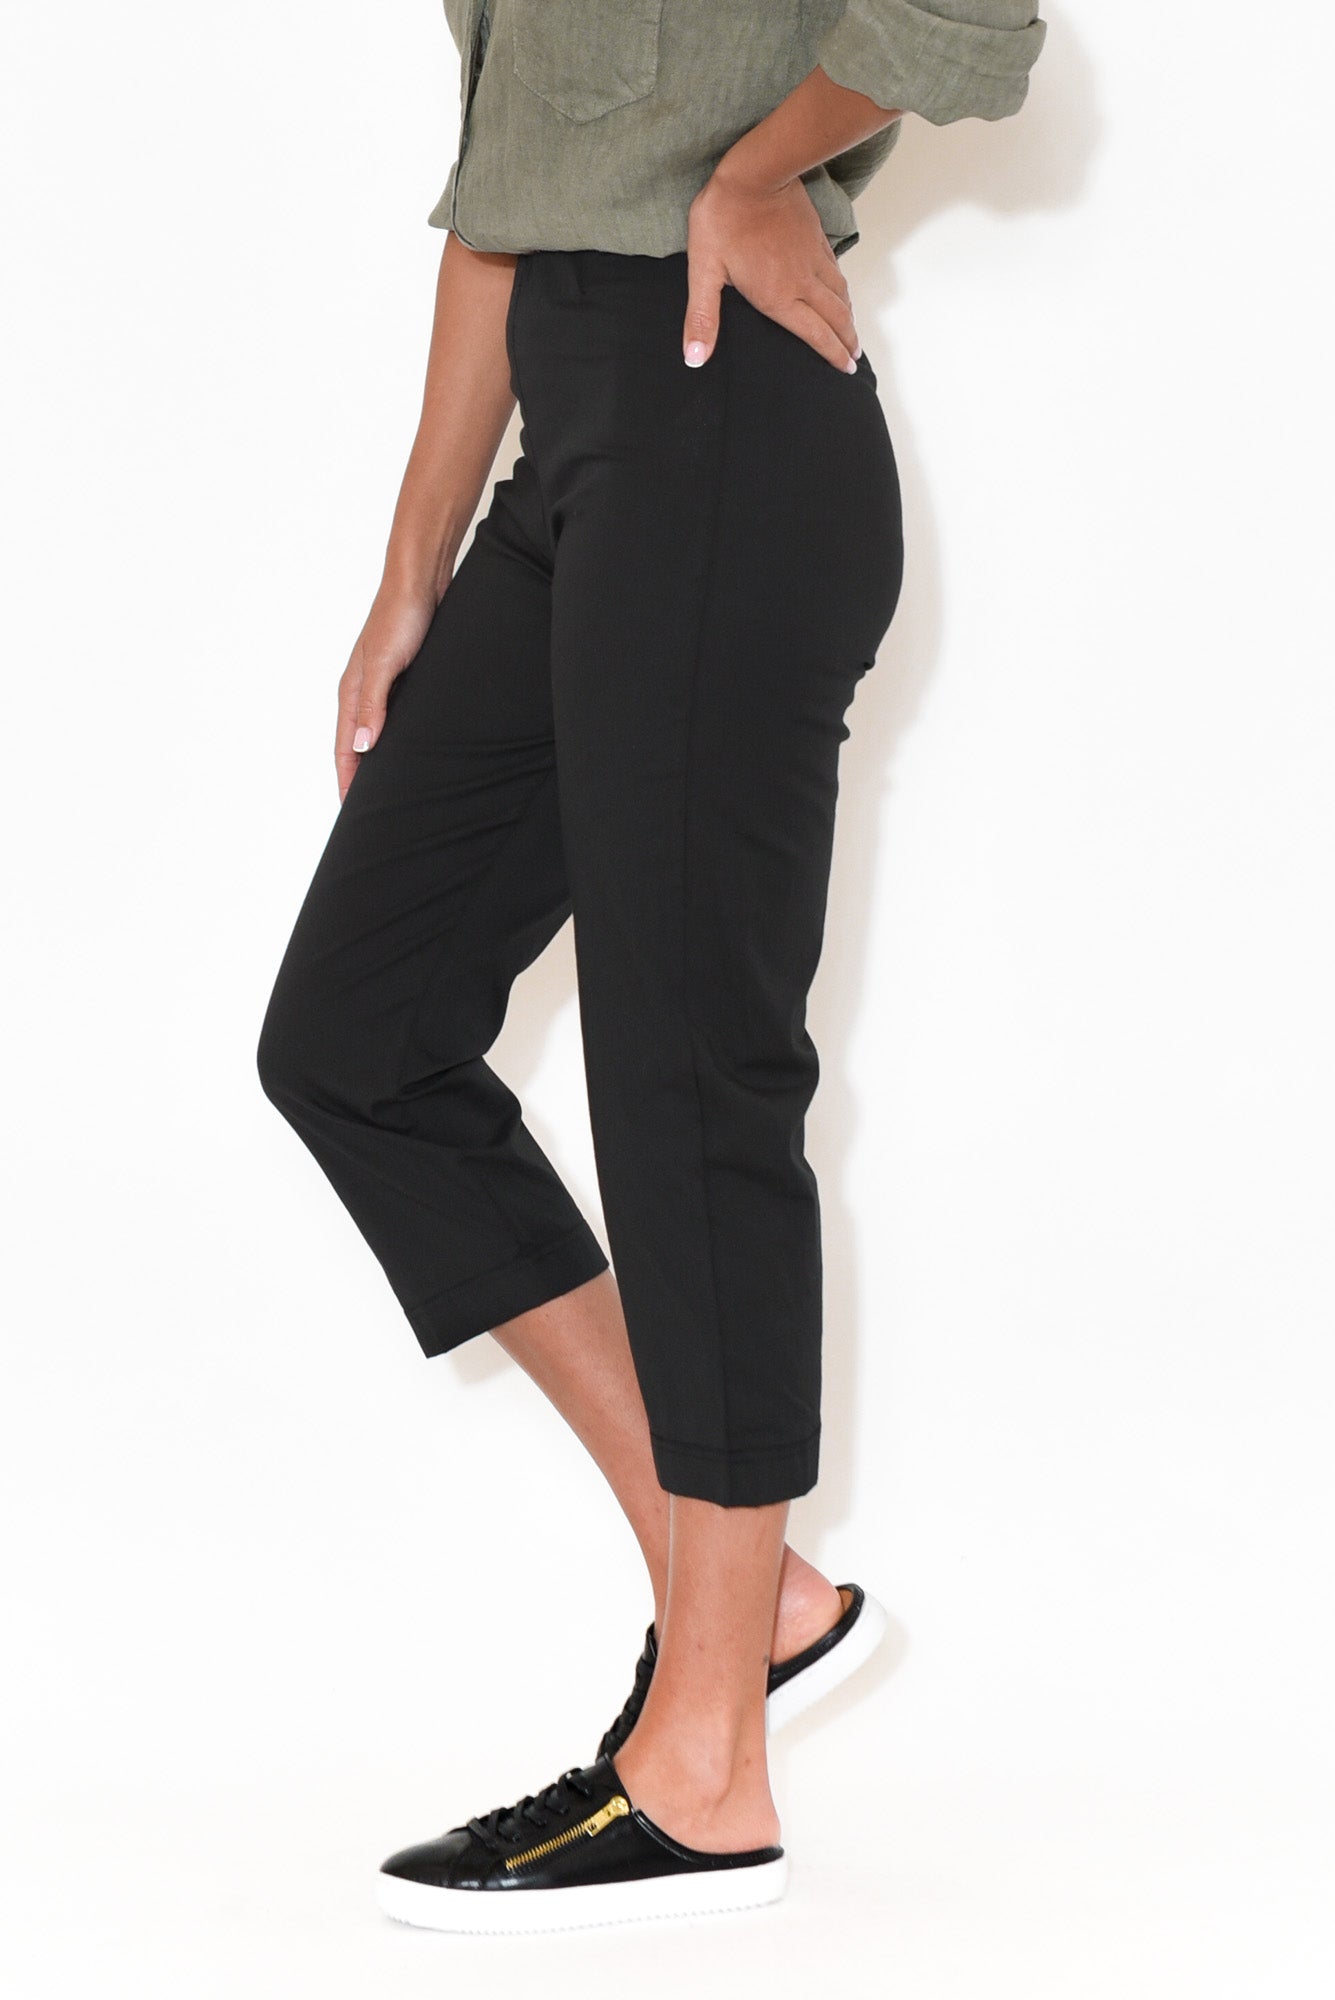 Jockey Black Capri Pants for Women #1300 [New Fit], Ladies Cotton Capri,  महिलाओं की सूती कैपरी, वूमेन कॉटन कैपरी - Zedds, New Delhi | ID:  2852587088633